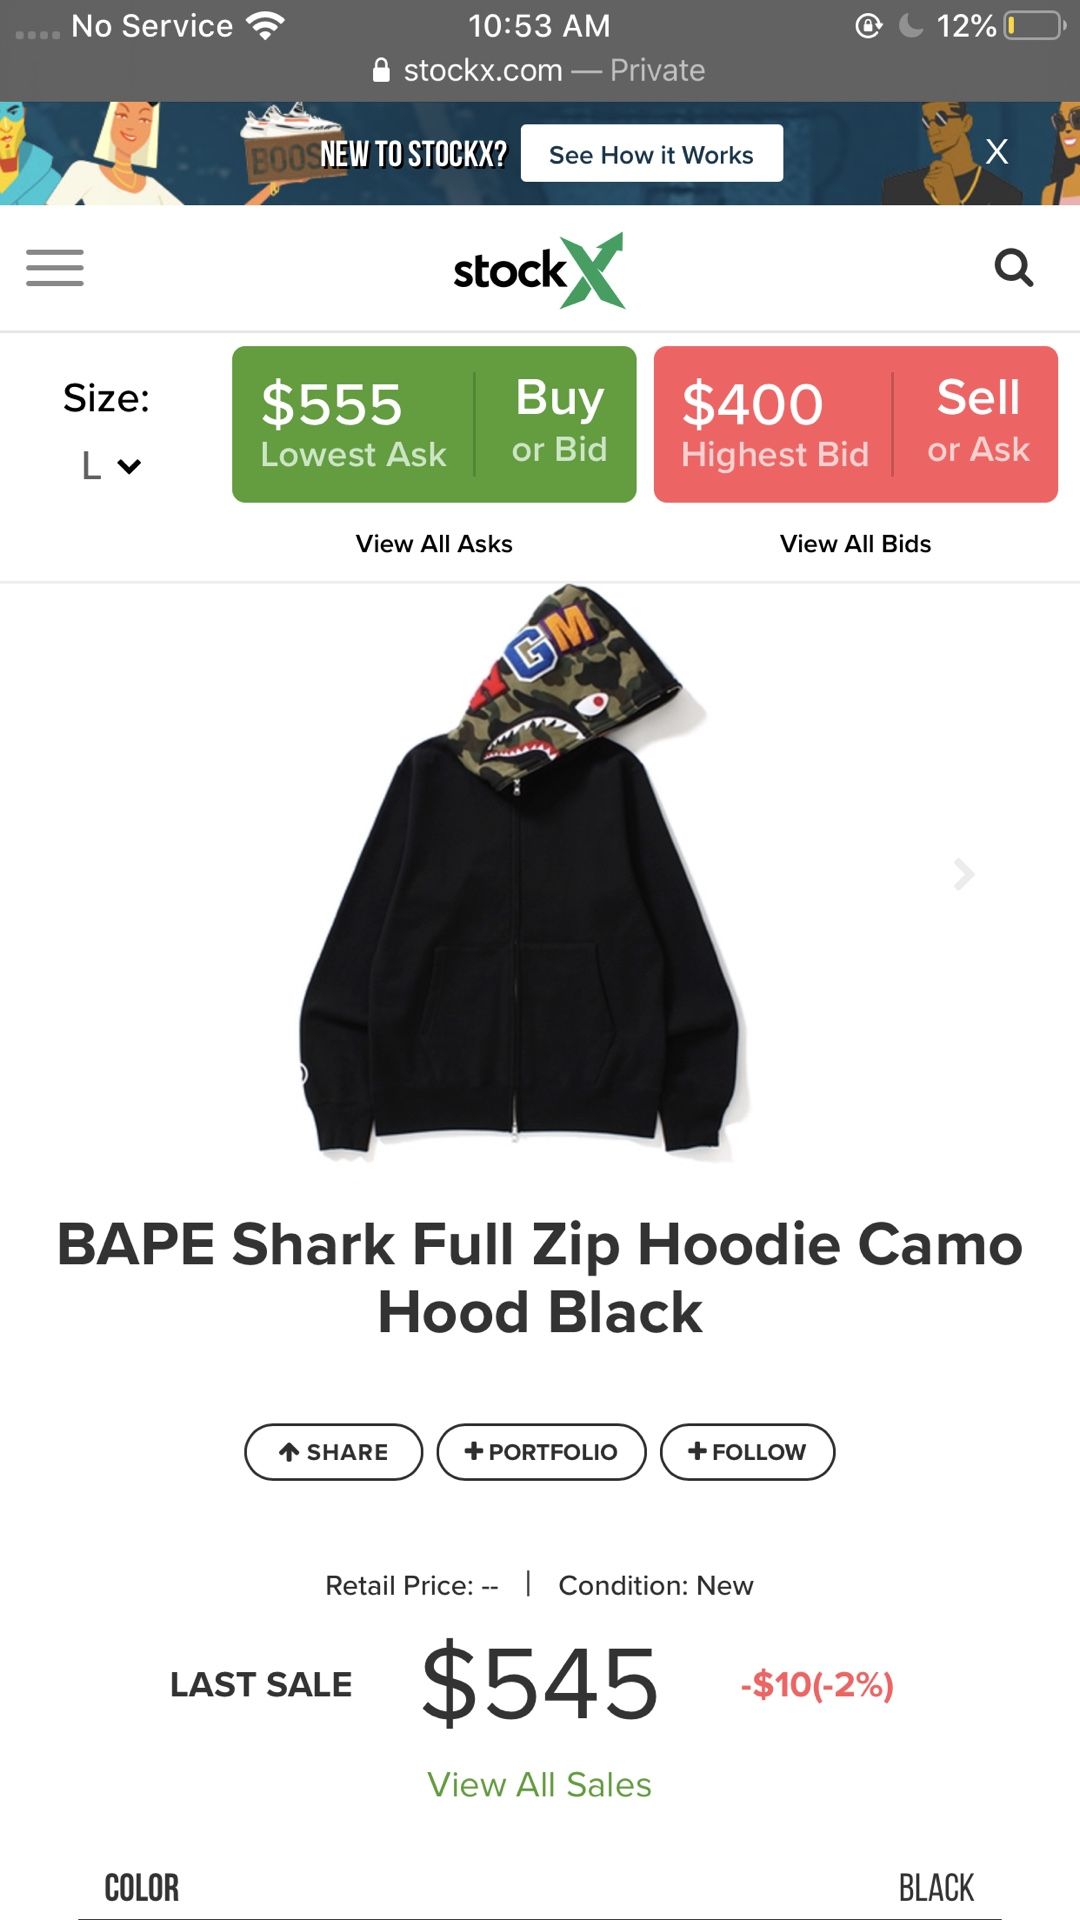 BAPE shark full zip Hoodie camo